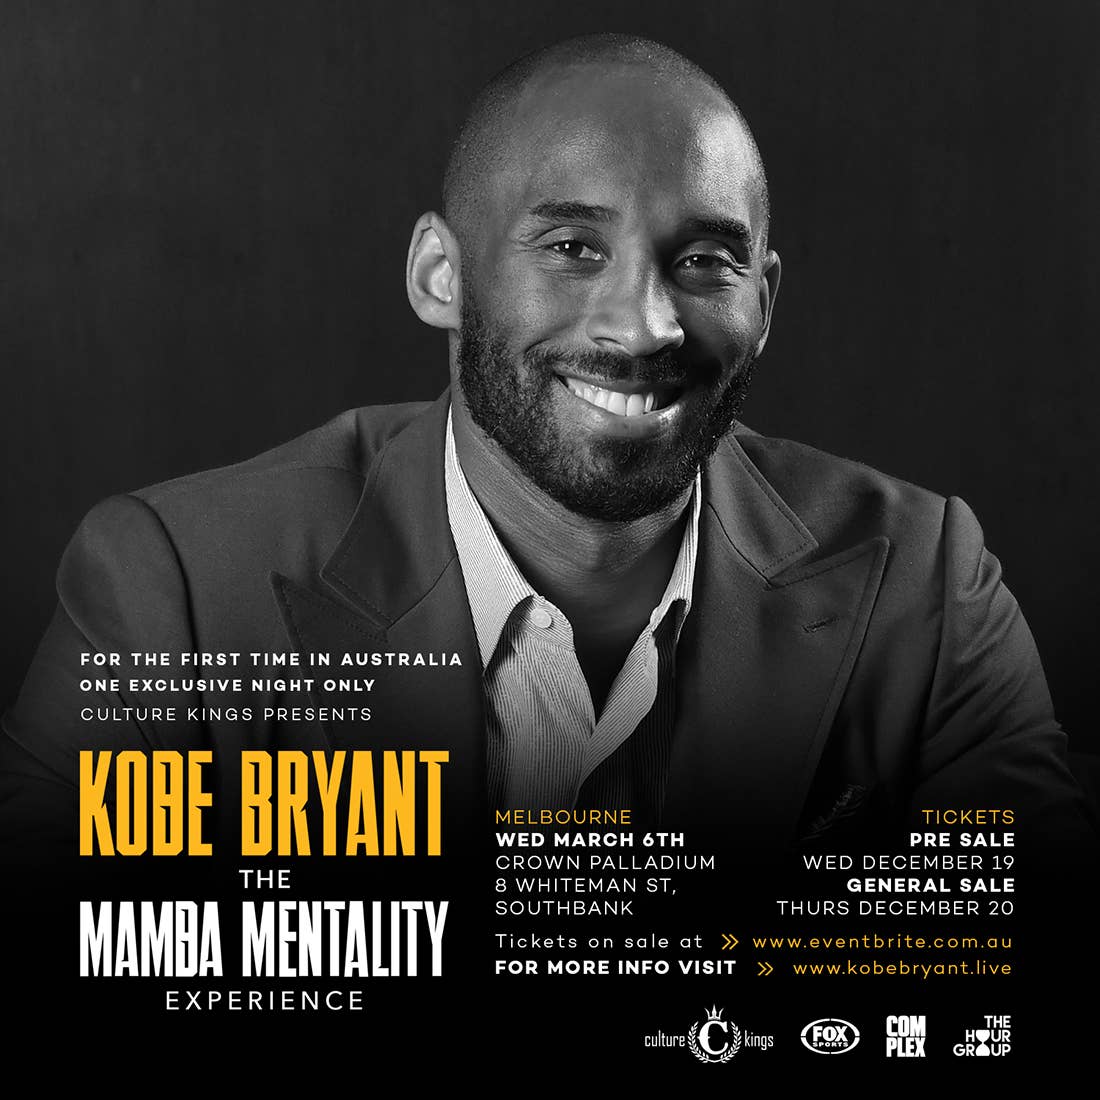 Kobe Bryant the Mamba Mentality Experience in Australia